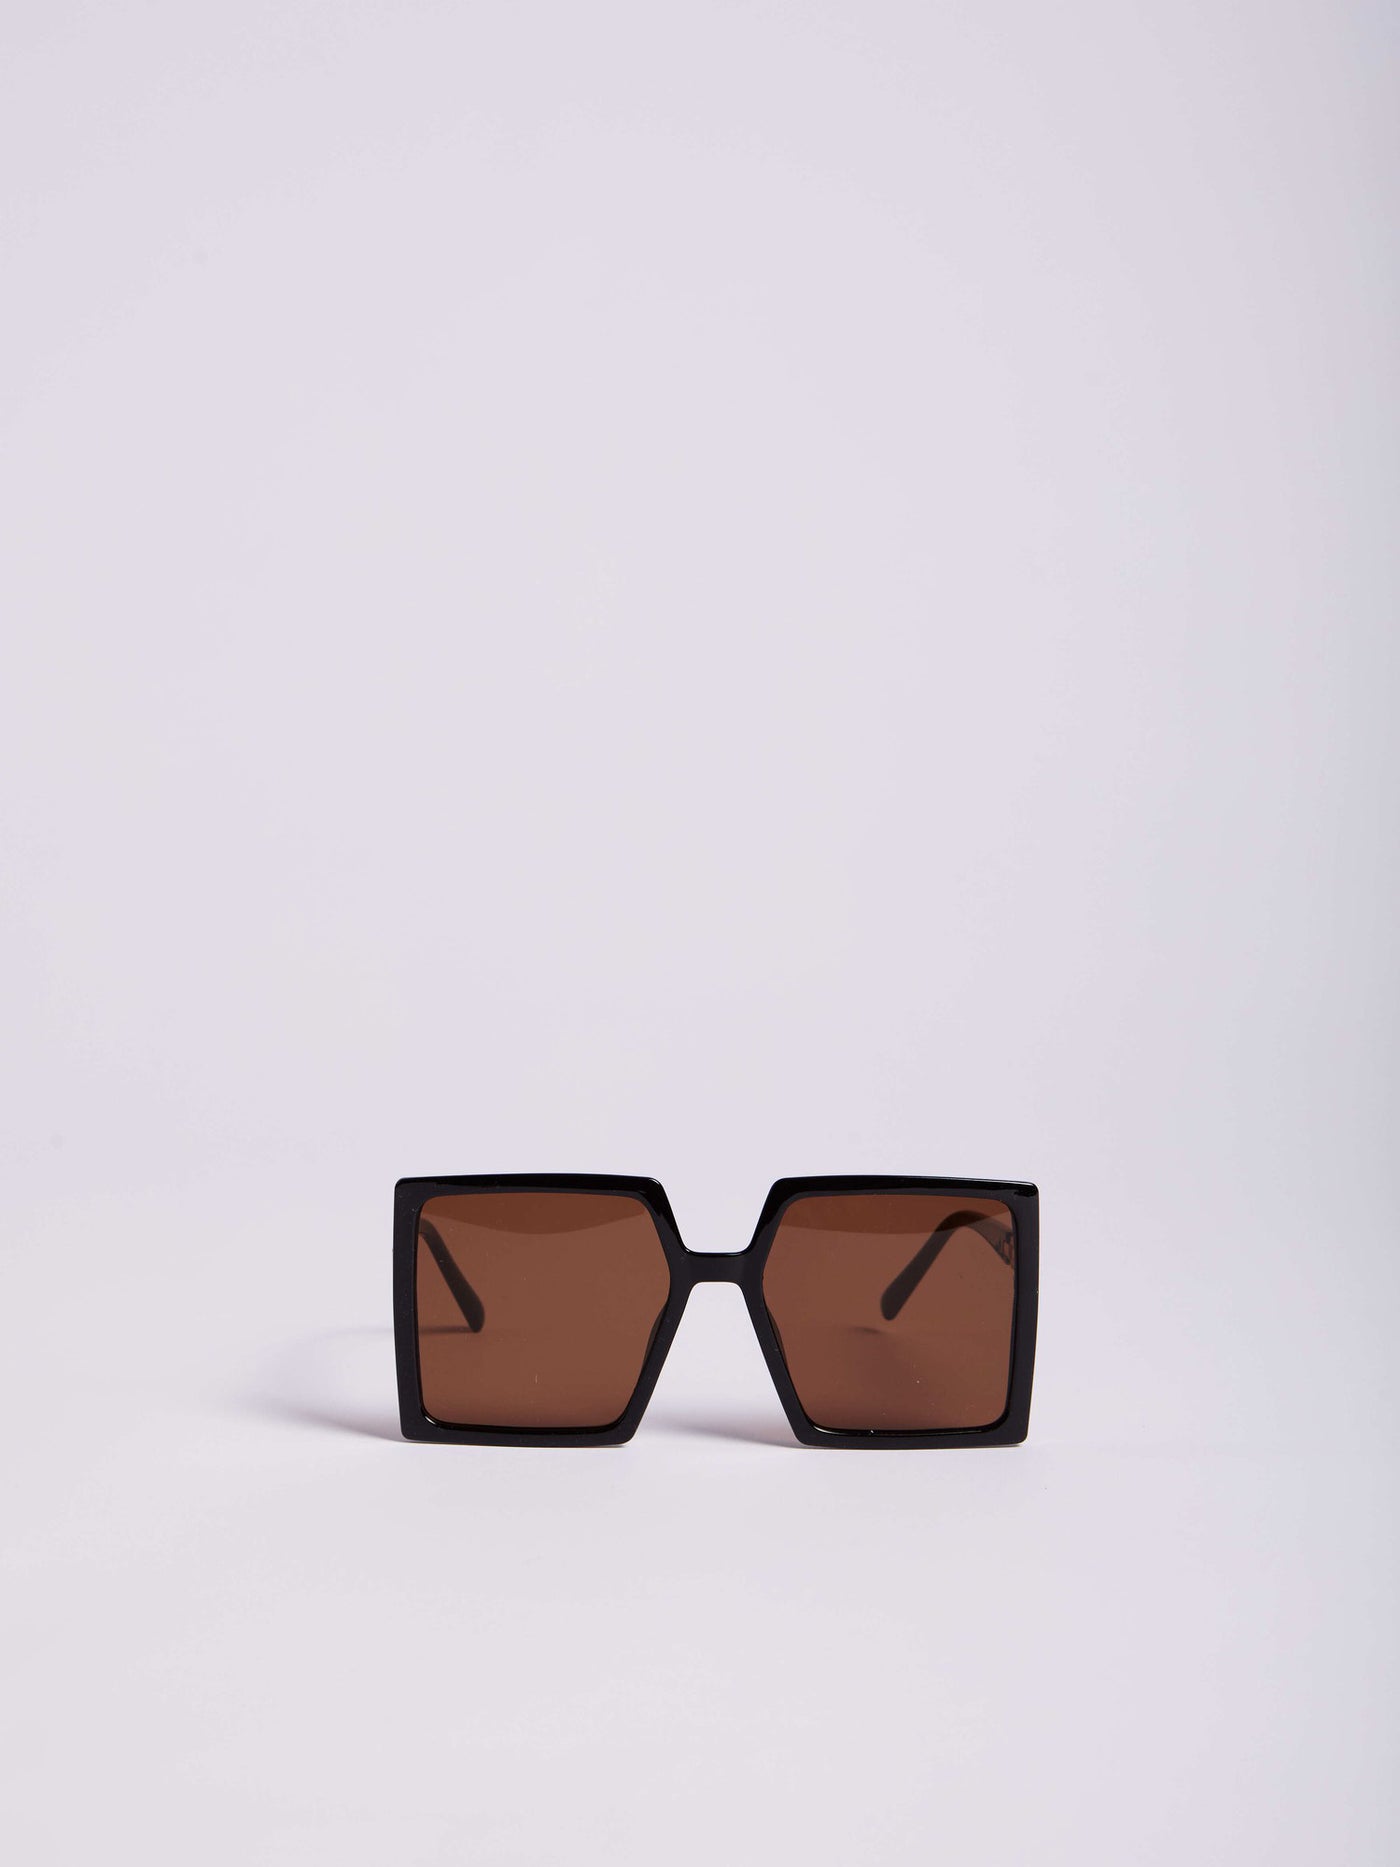 Sunglasses - Sharp Squared Lenses